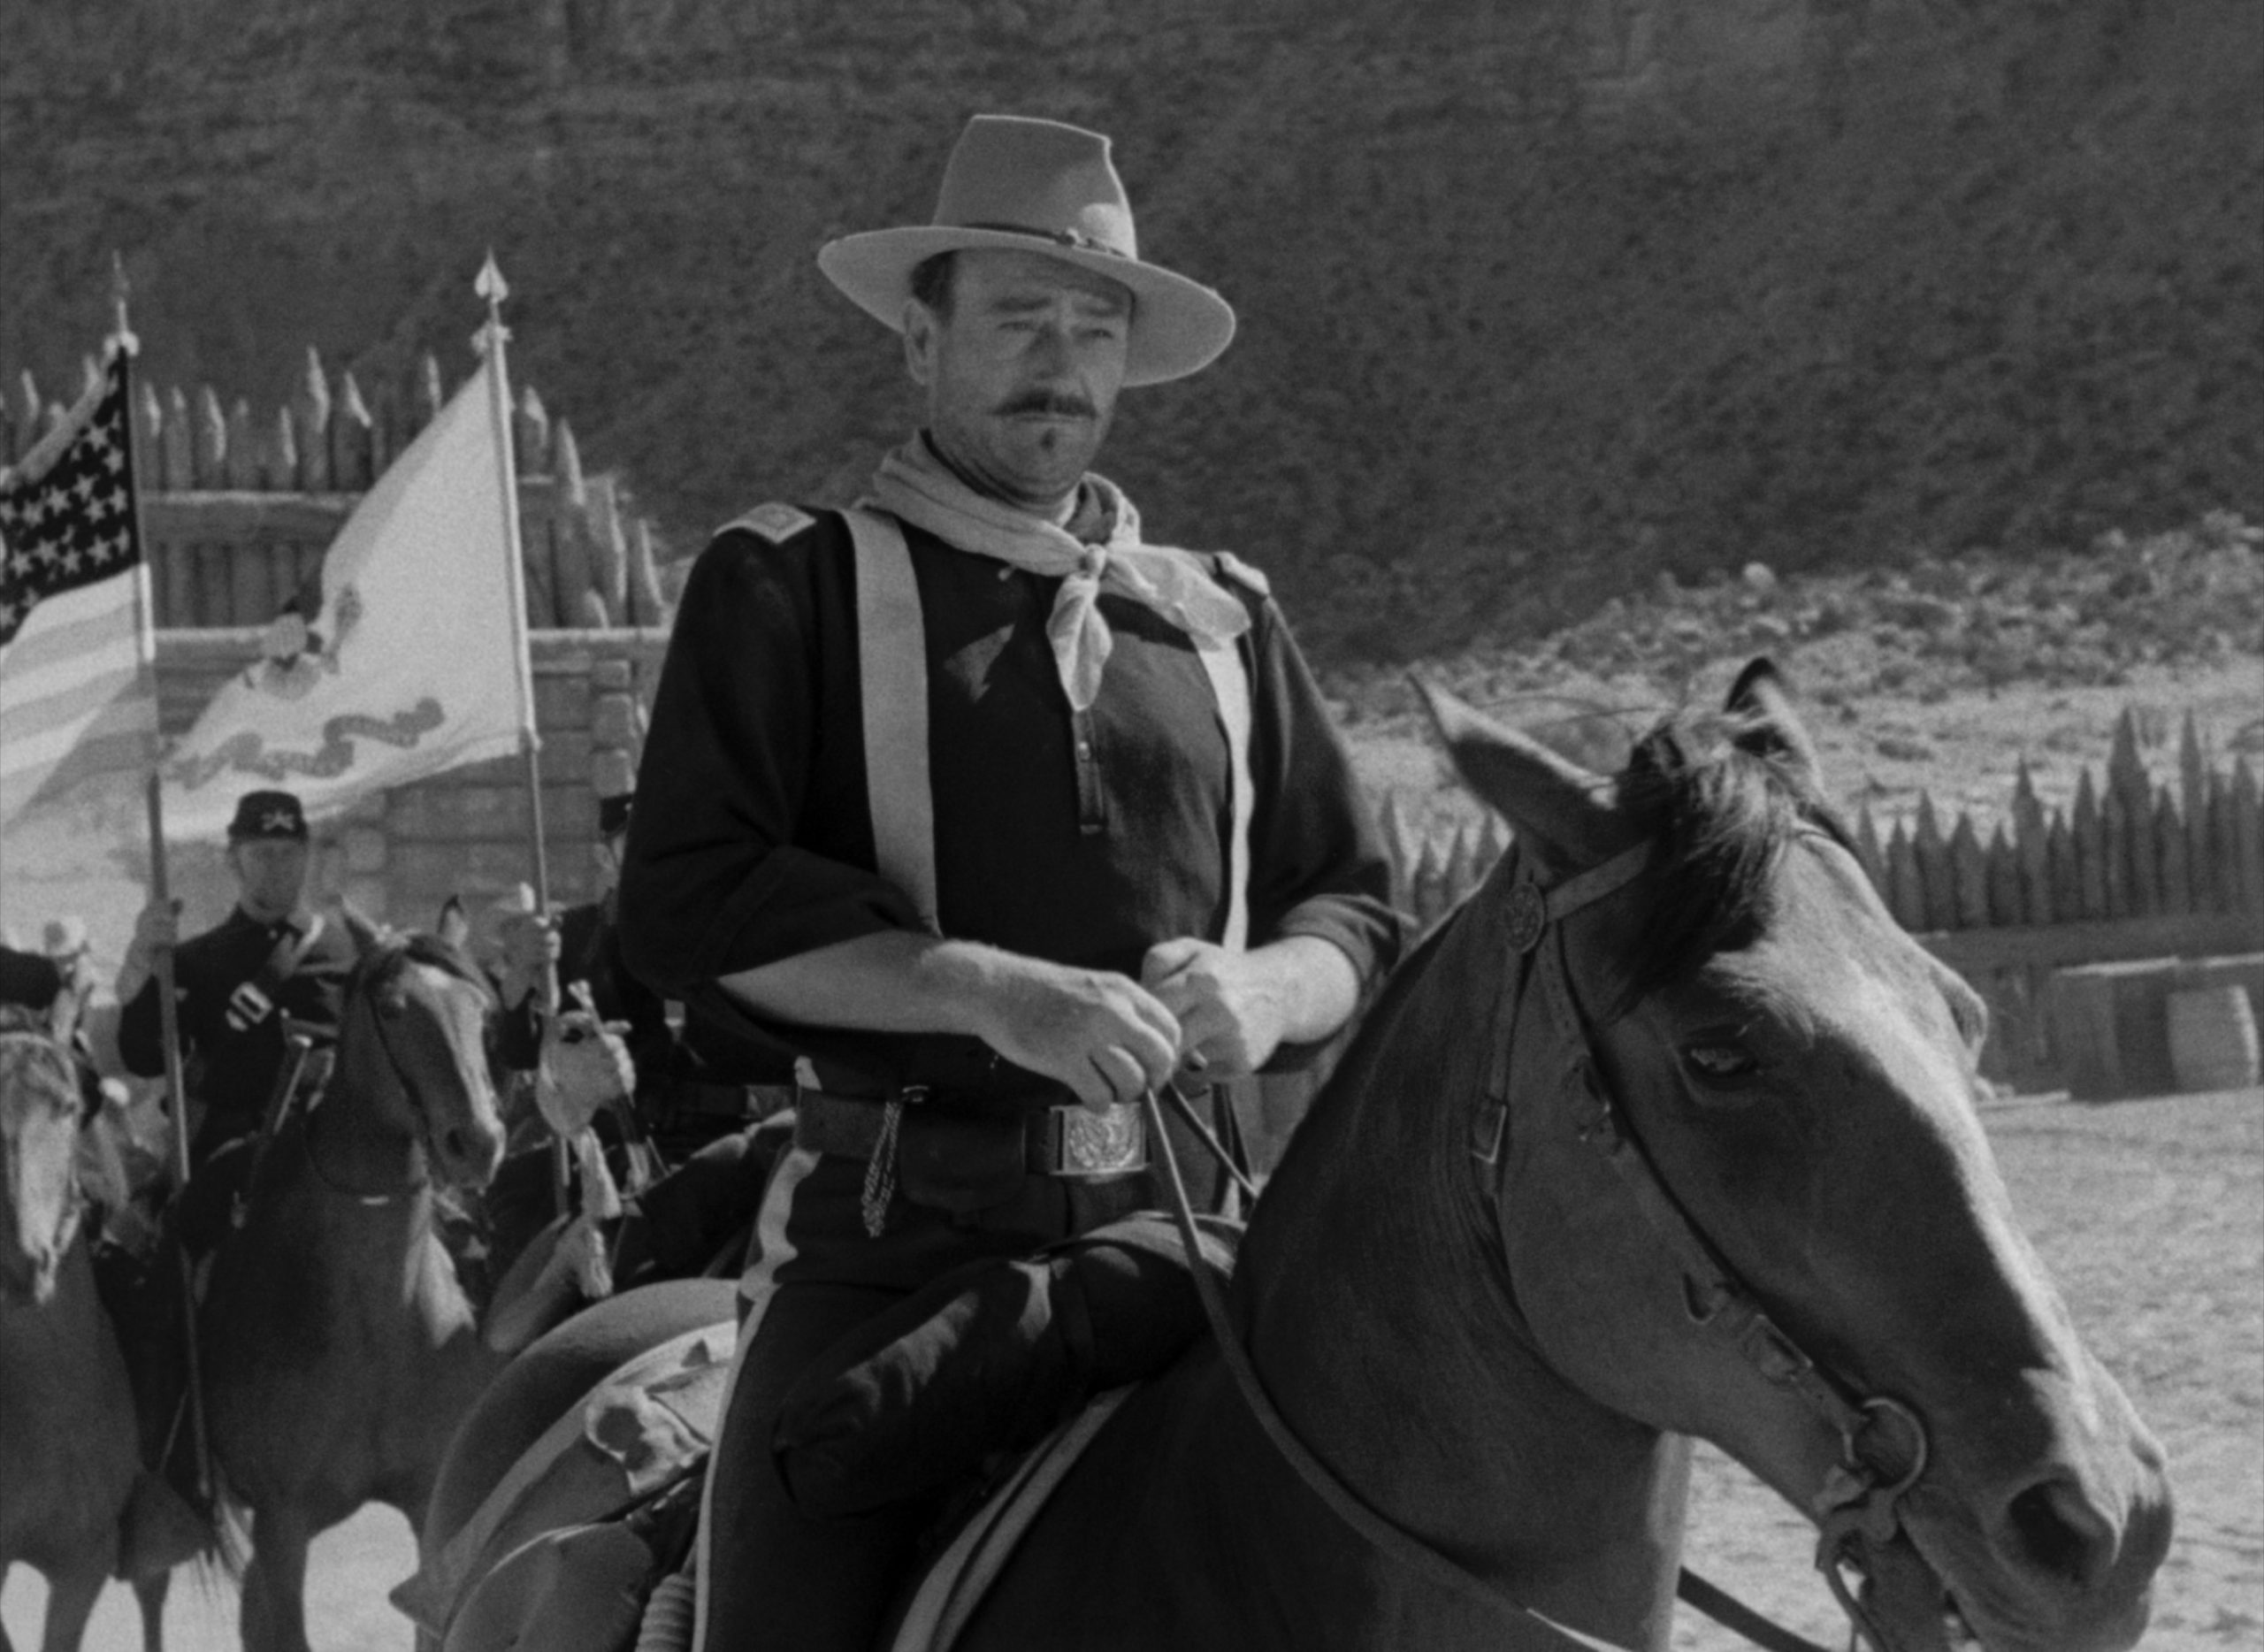 John Wayne in Rio Grande (1950)